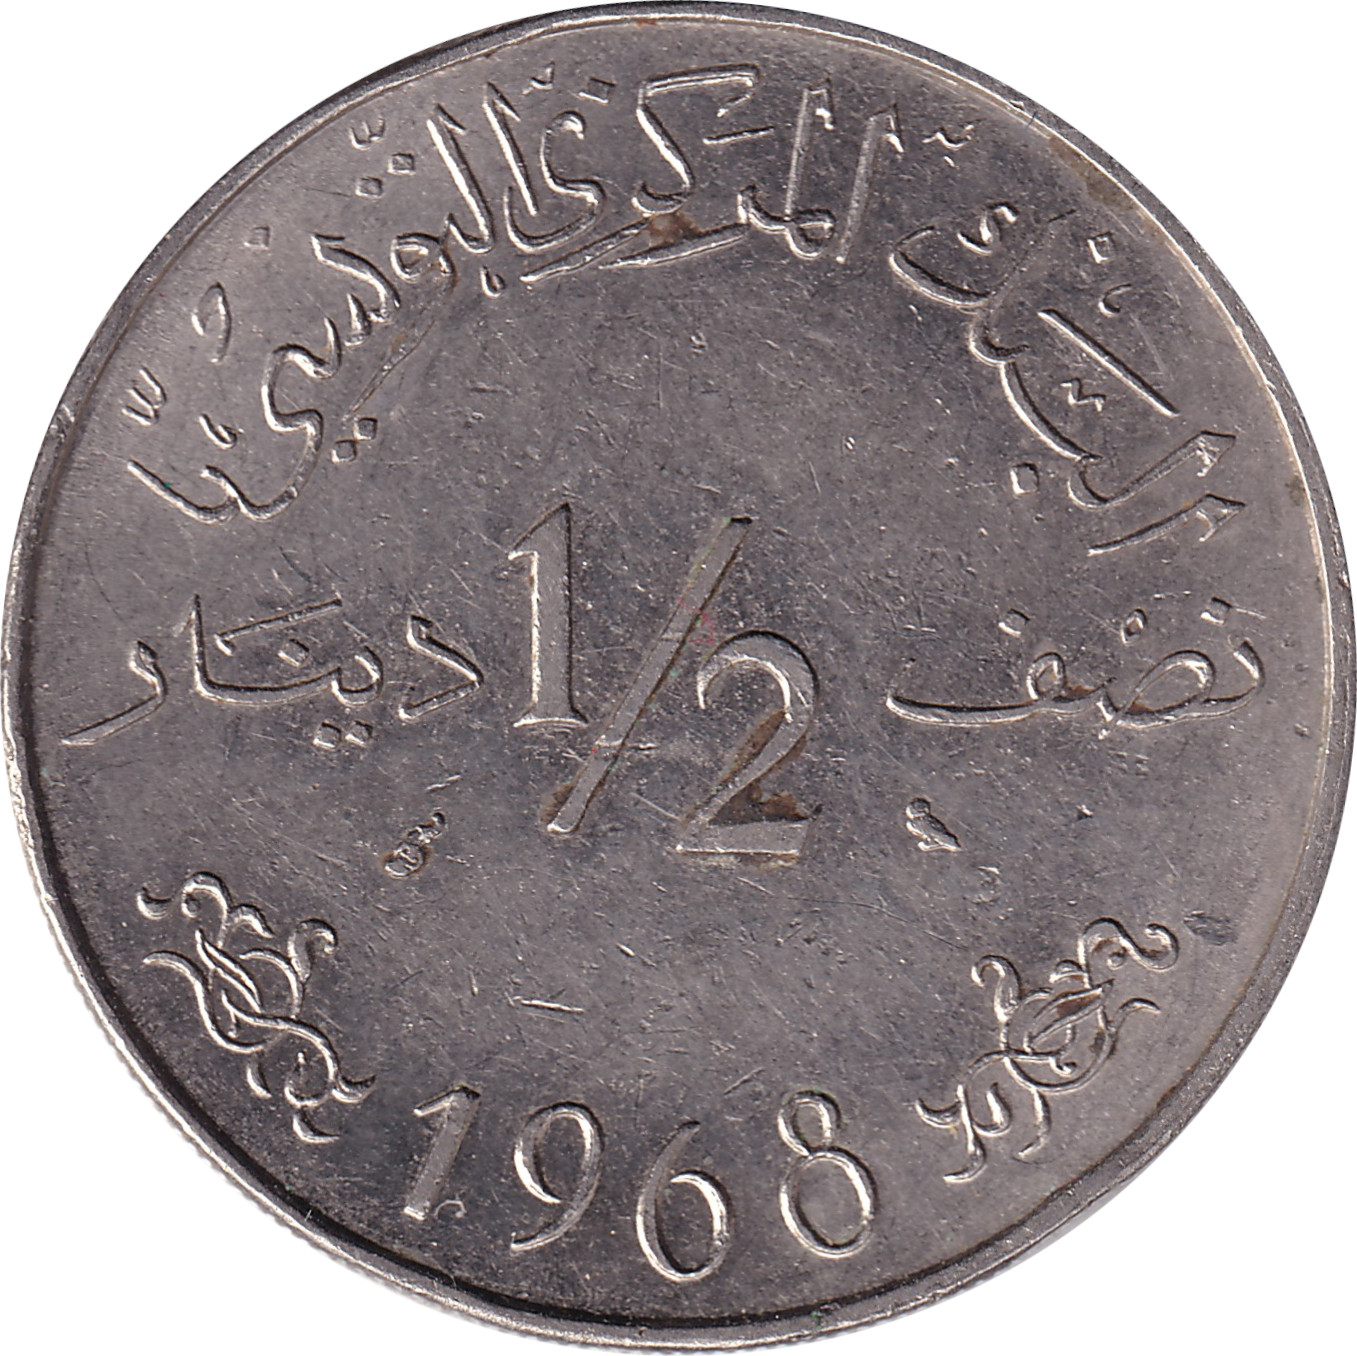 1/2 dinar - Habib Bourguiba - Nickel